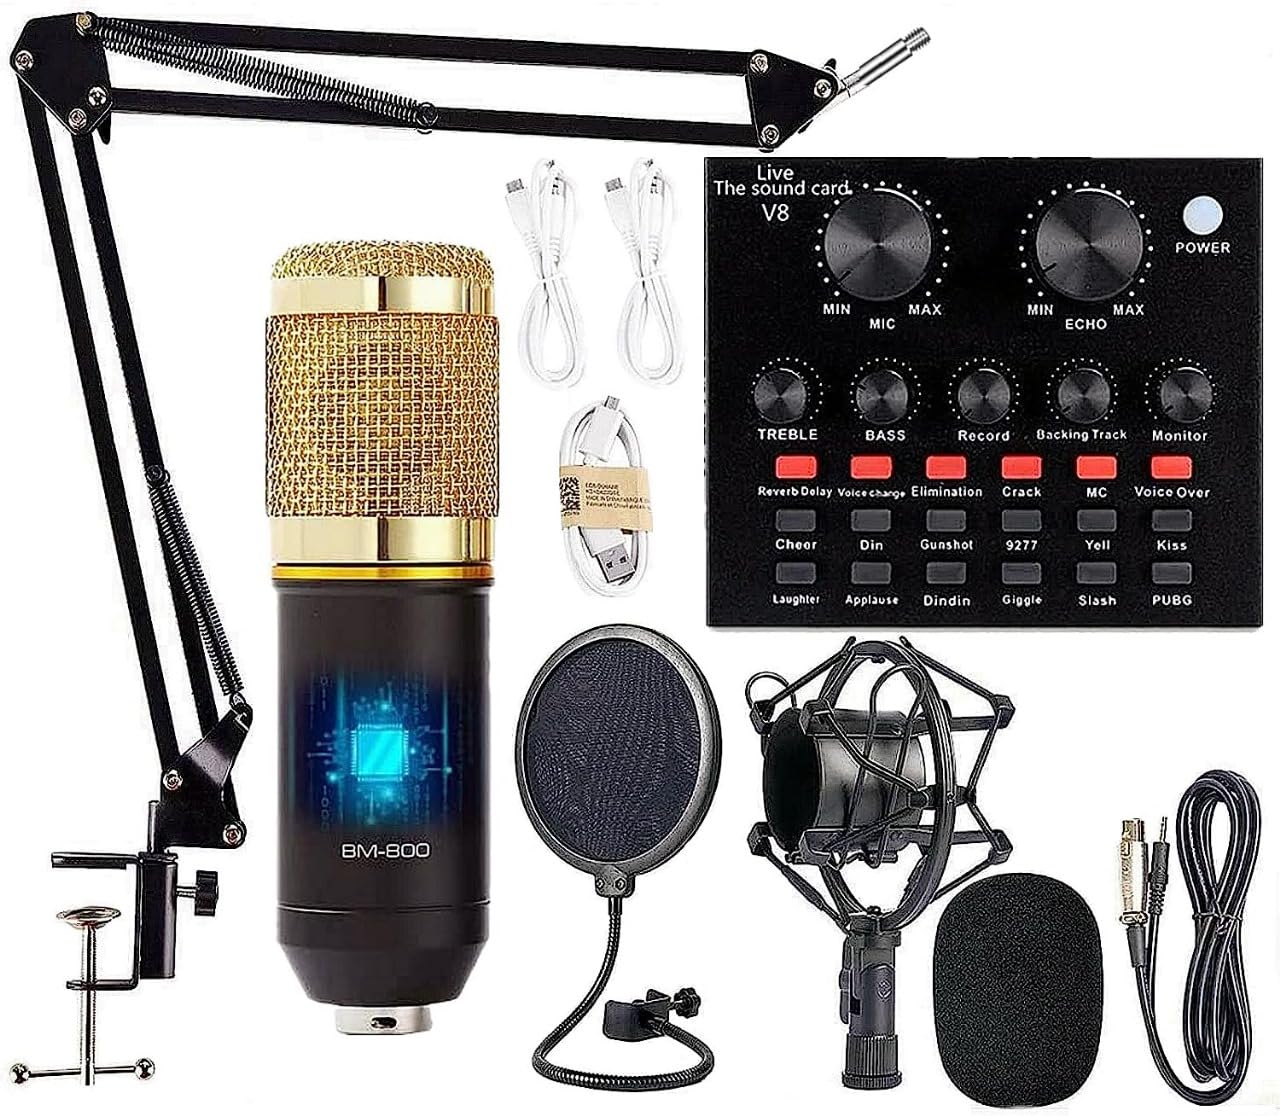 ADZOY Podcast Recording Bundle, BM-800 Mic, Sound Card, Mic Arm, Mount, Pop Filter, Studio & Broadcasting